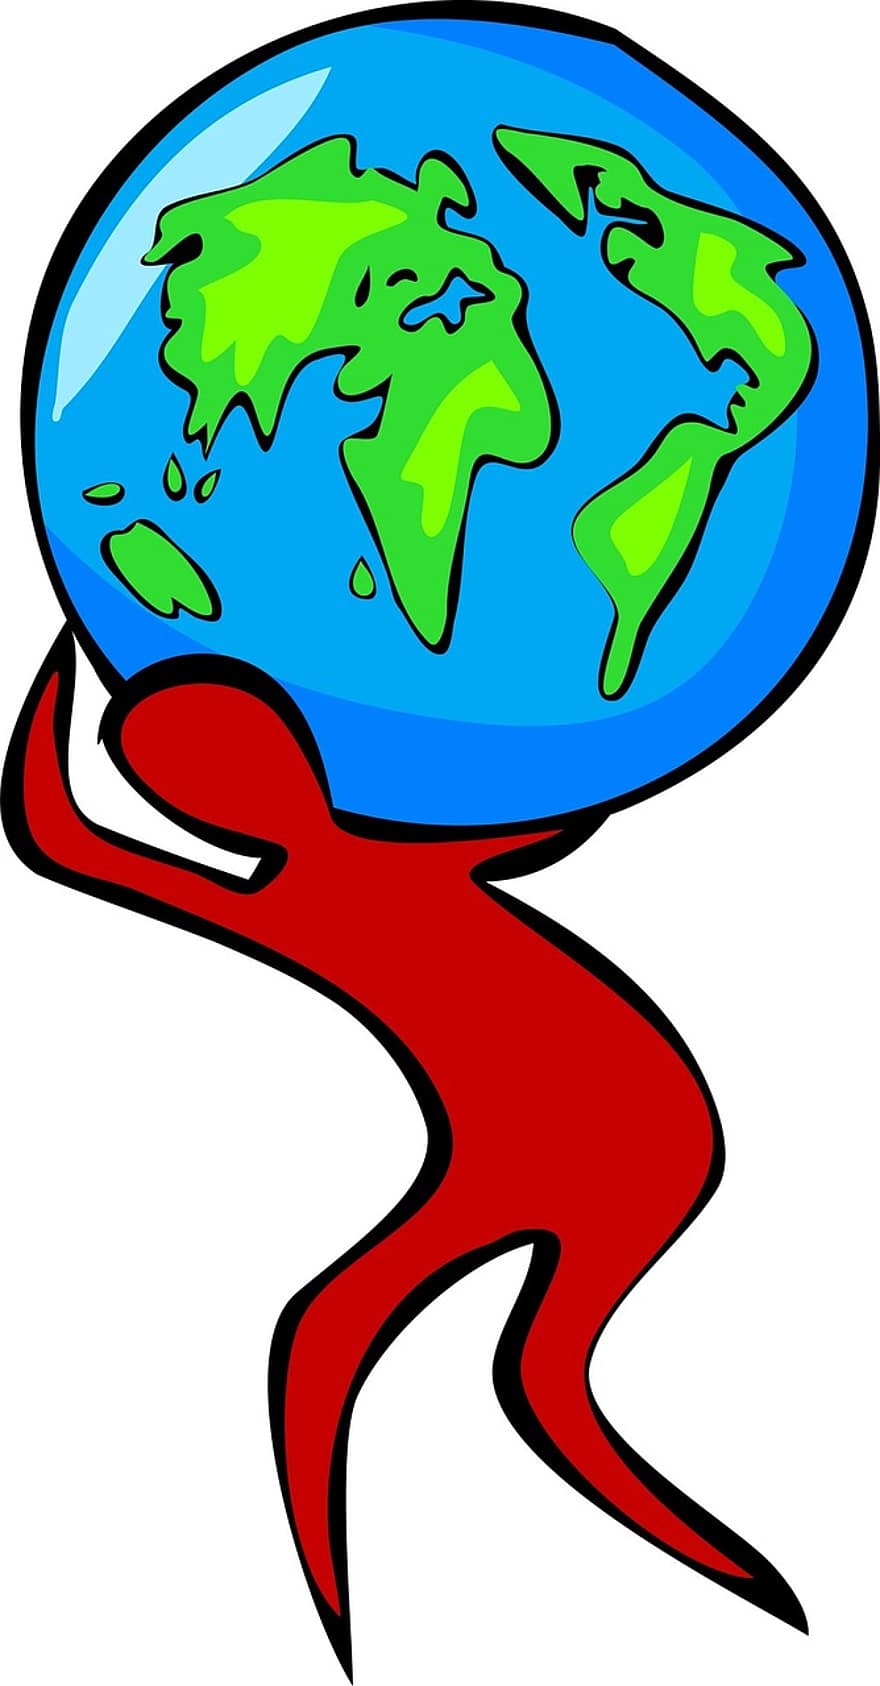 wereld-, wereldbol, wereldwijd, www, globaal, planeet, gebied, icoon, logo, vorm, communicatie